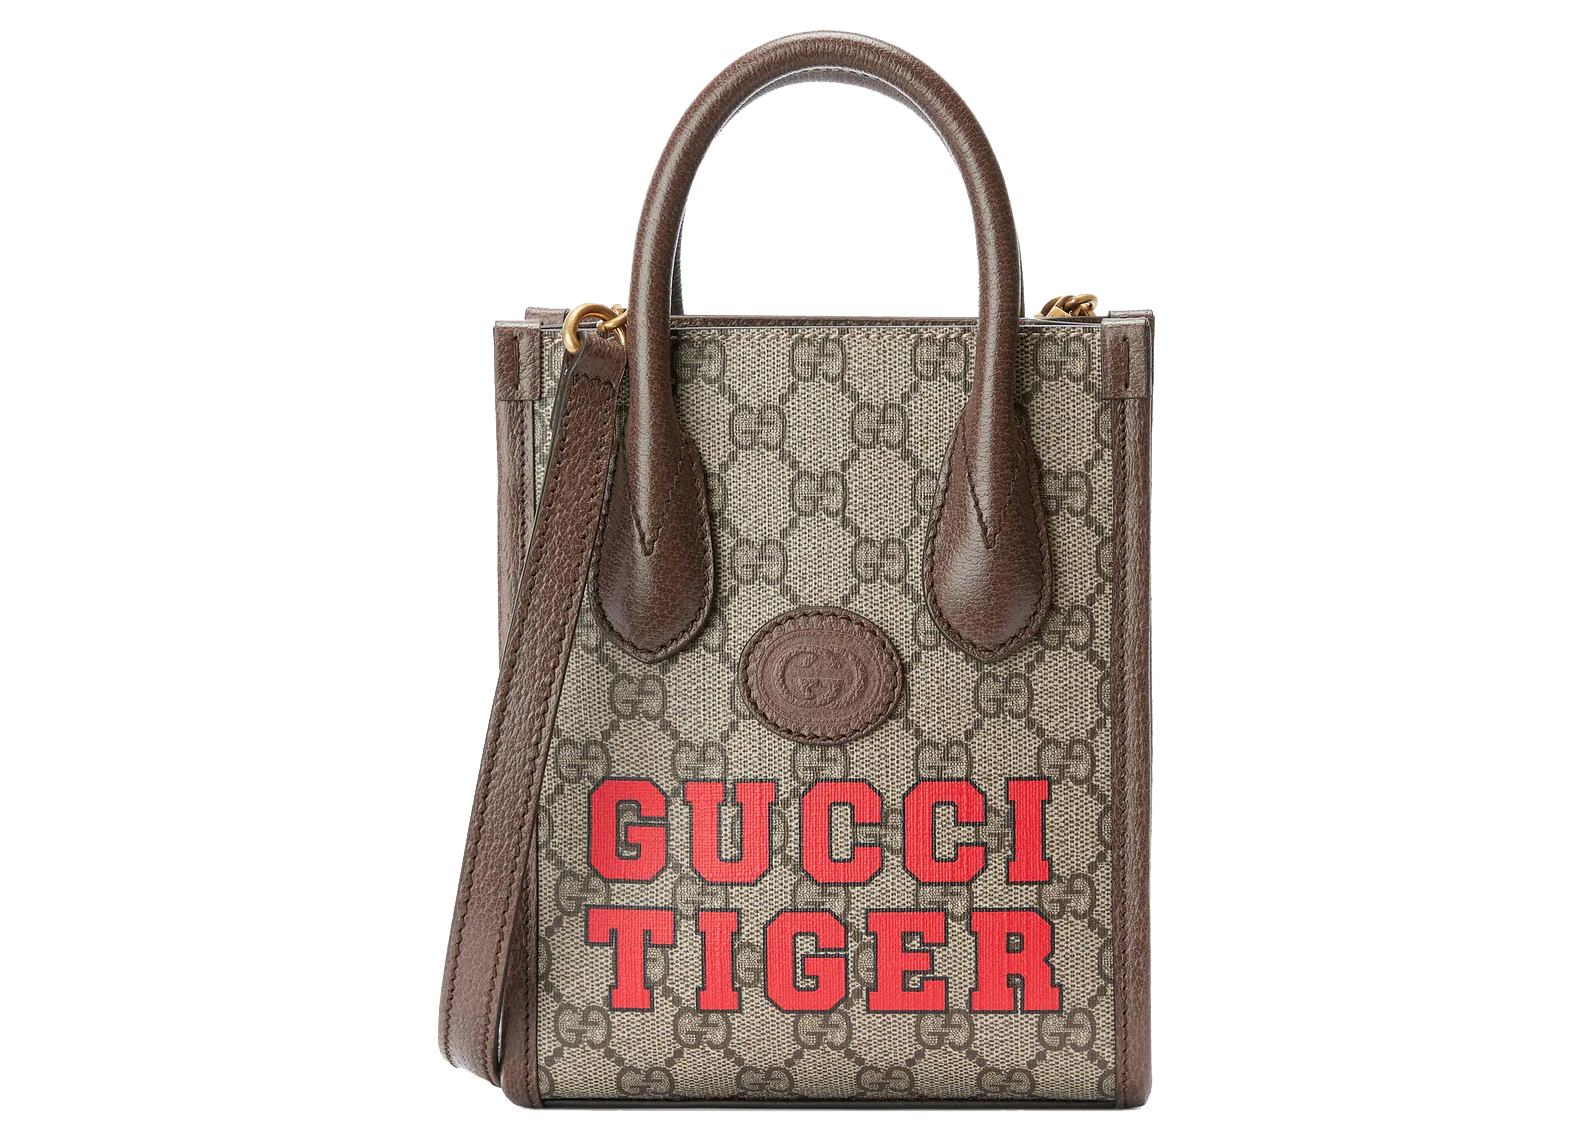 Gucci Tiger GG Mini Tote Bag Beige/Ebony in Canvas/Leather with ...